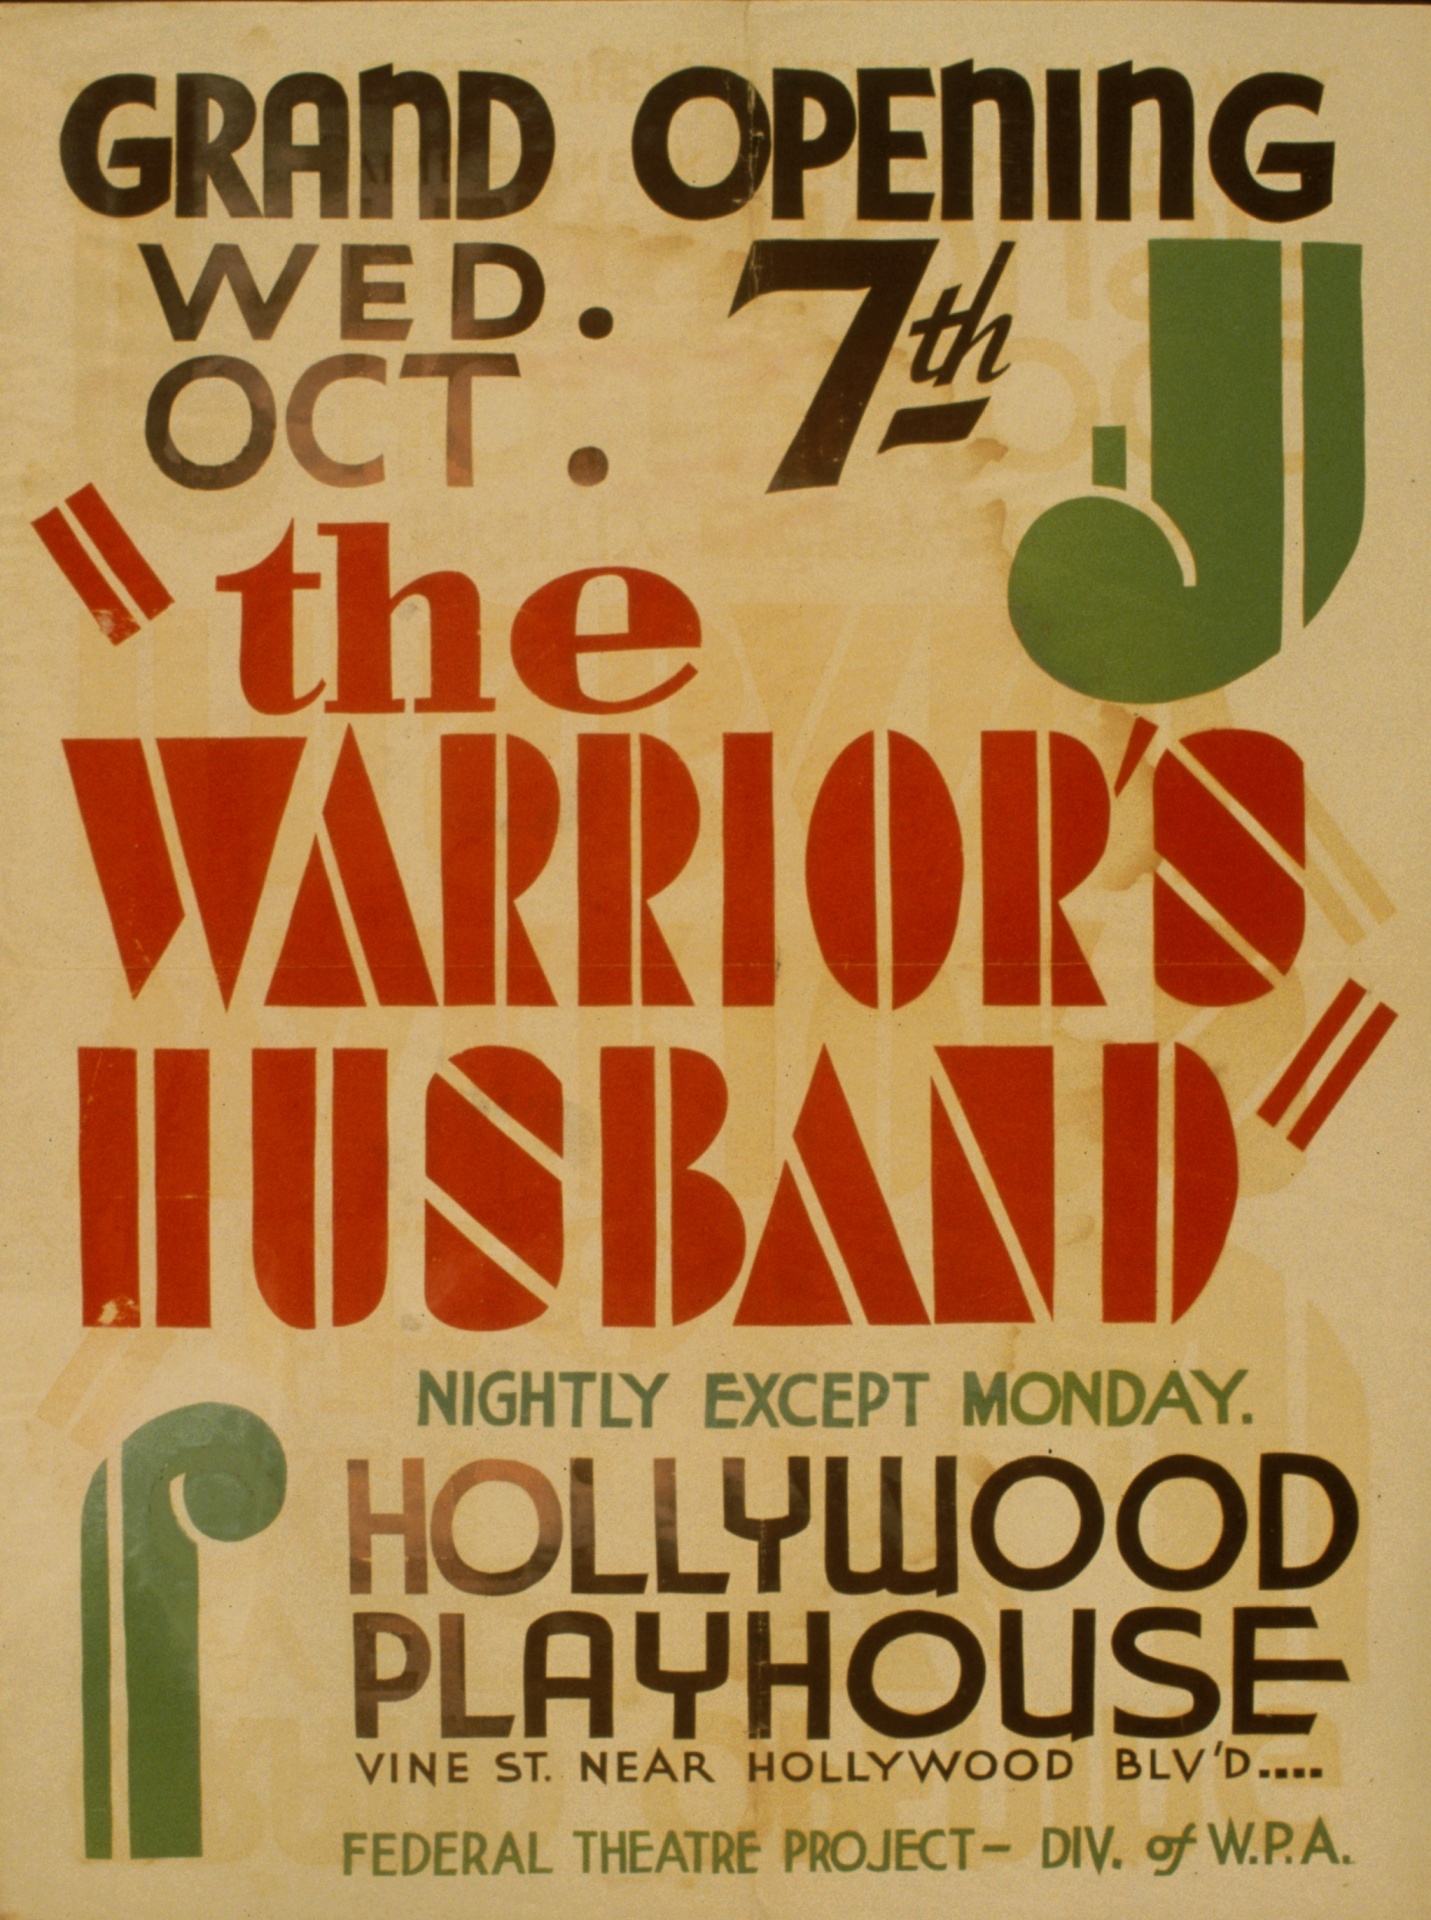 Vintage Theatre Poster